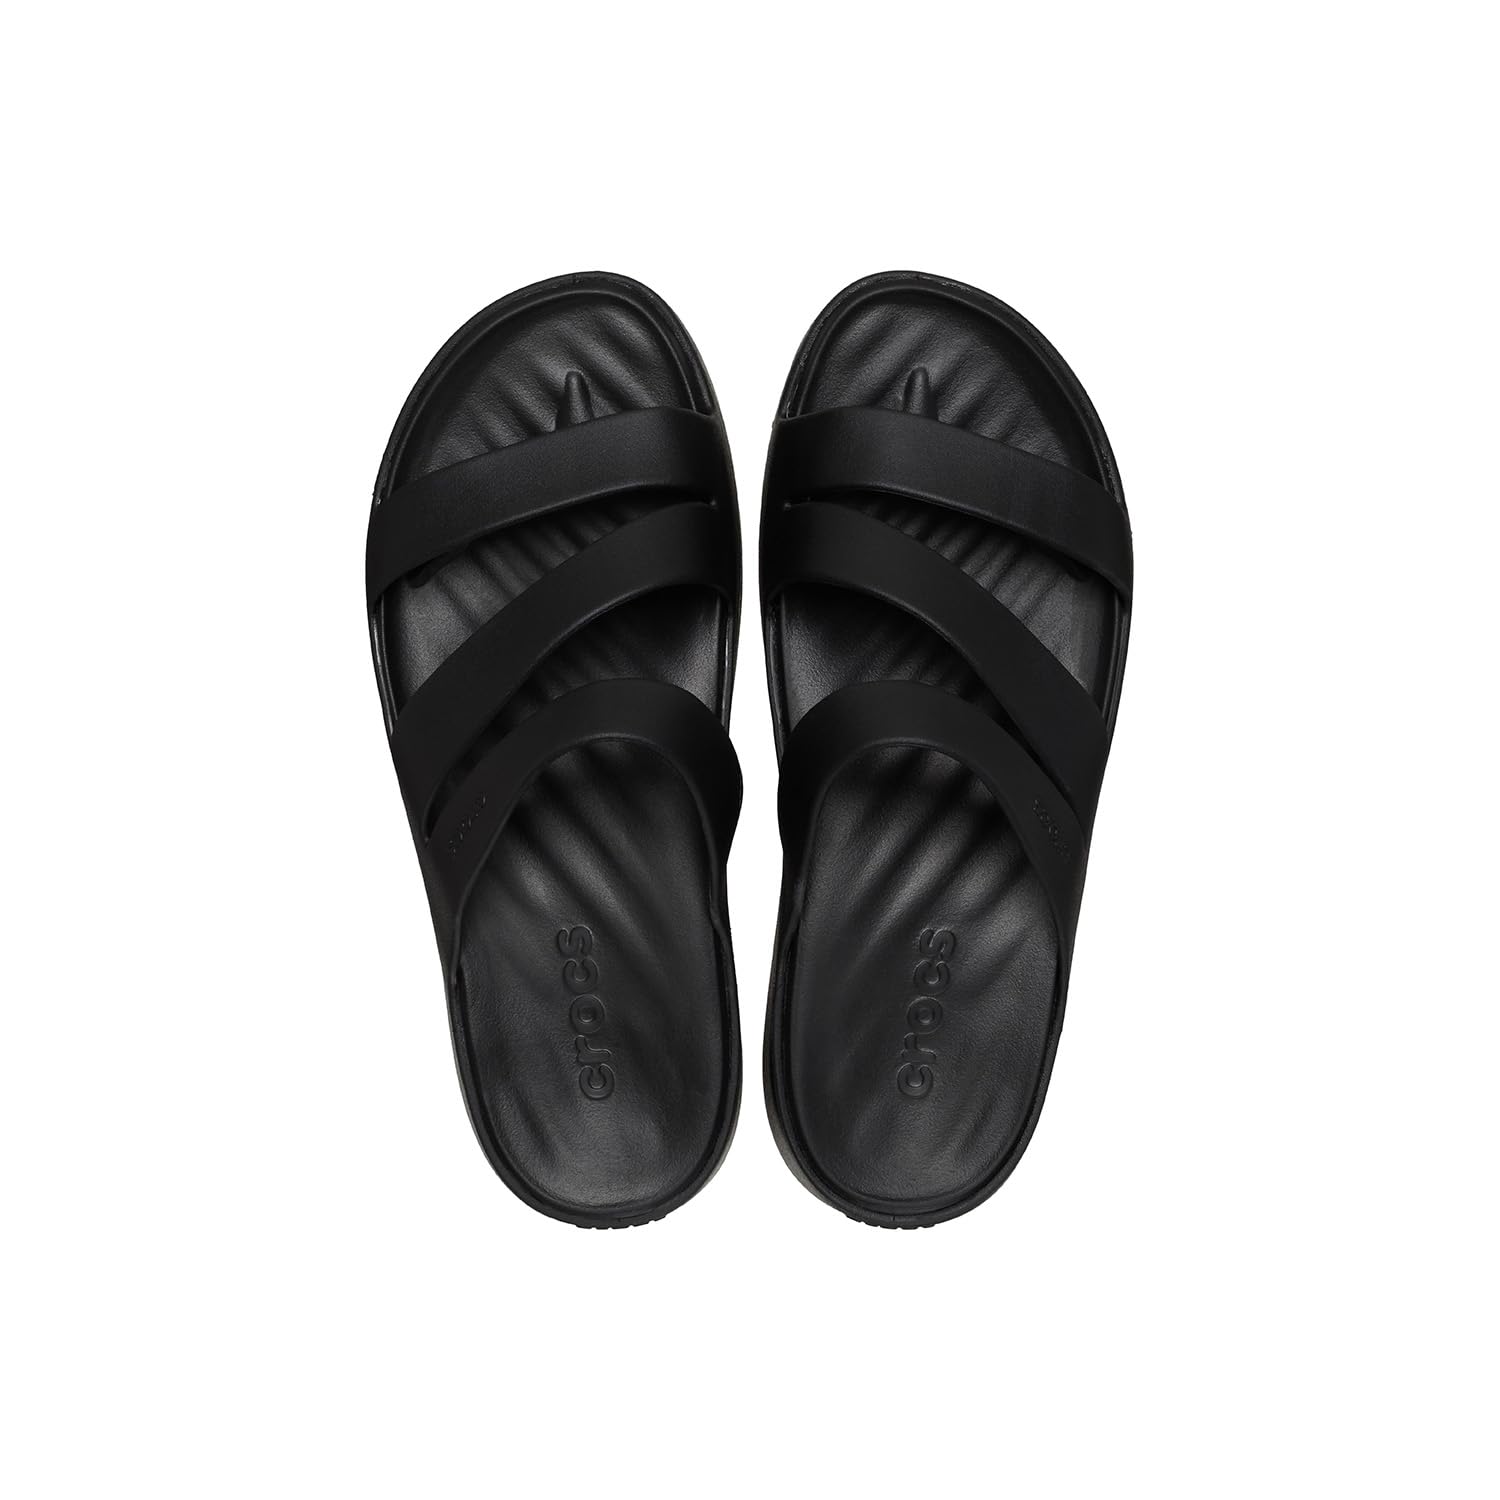 Crocs Women Getaway Platform Strappy Sandals